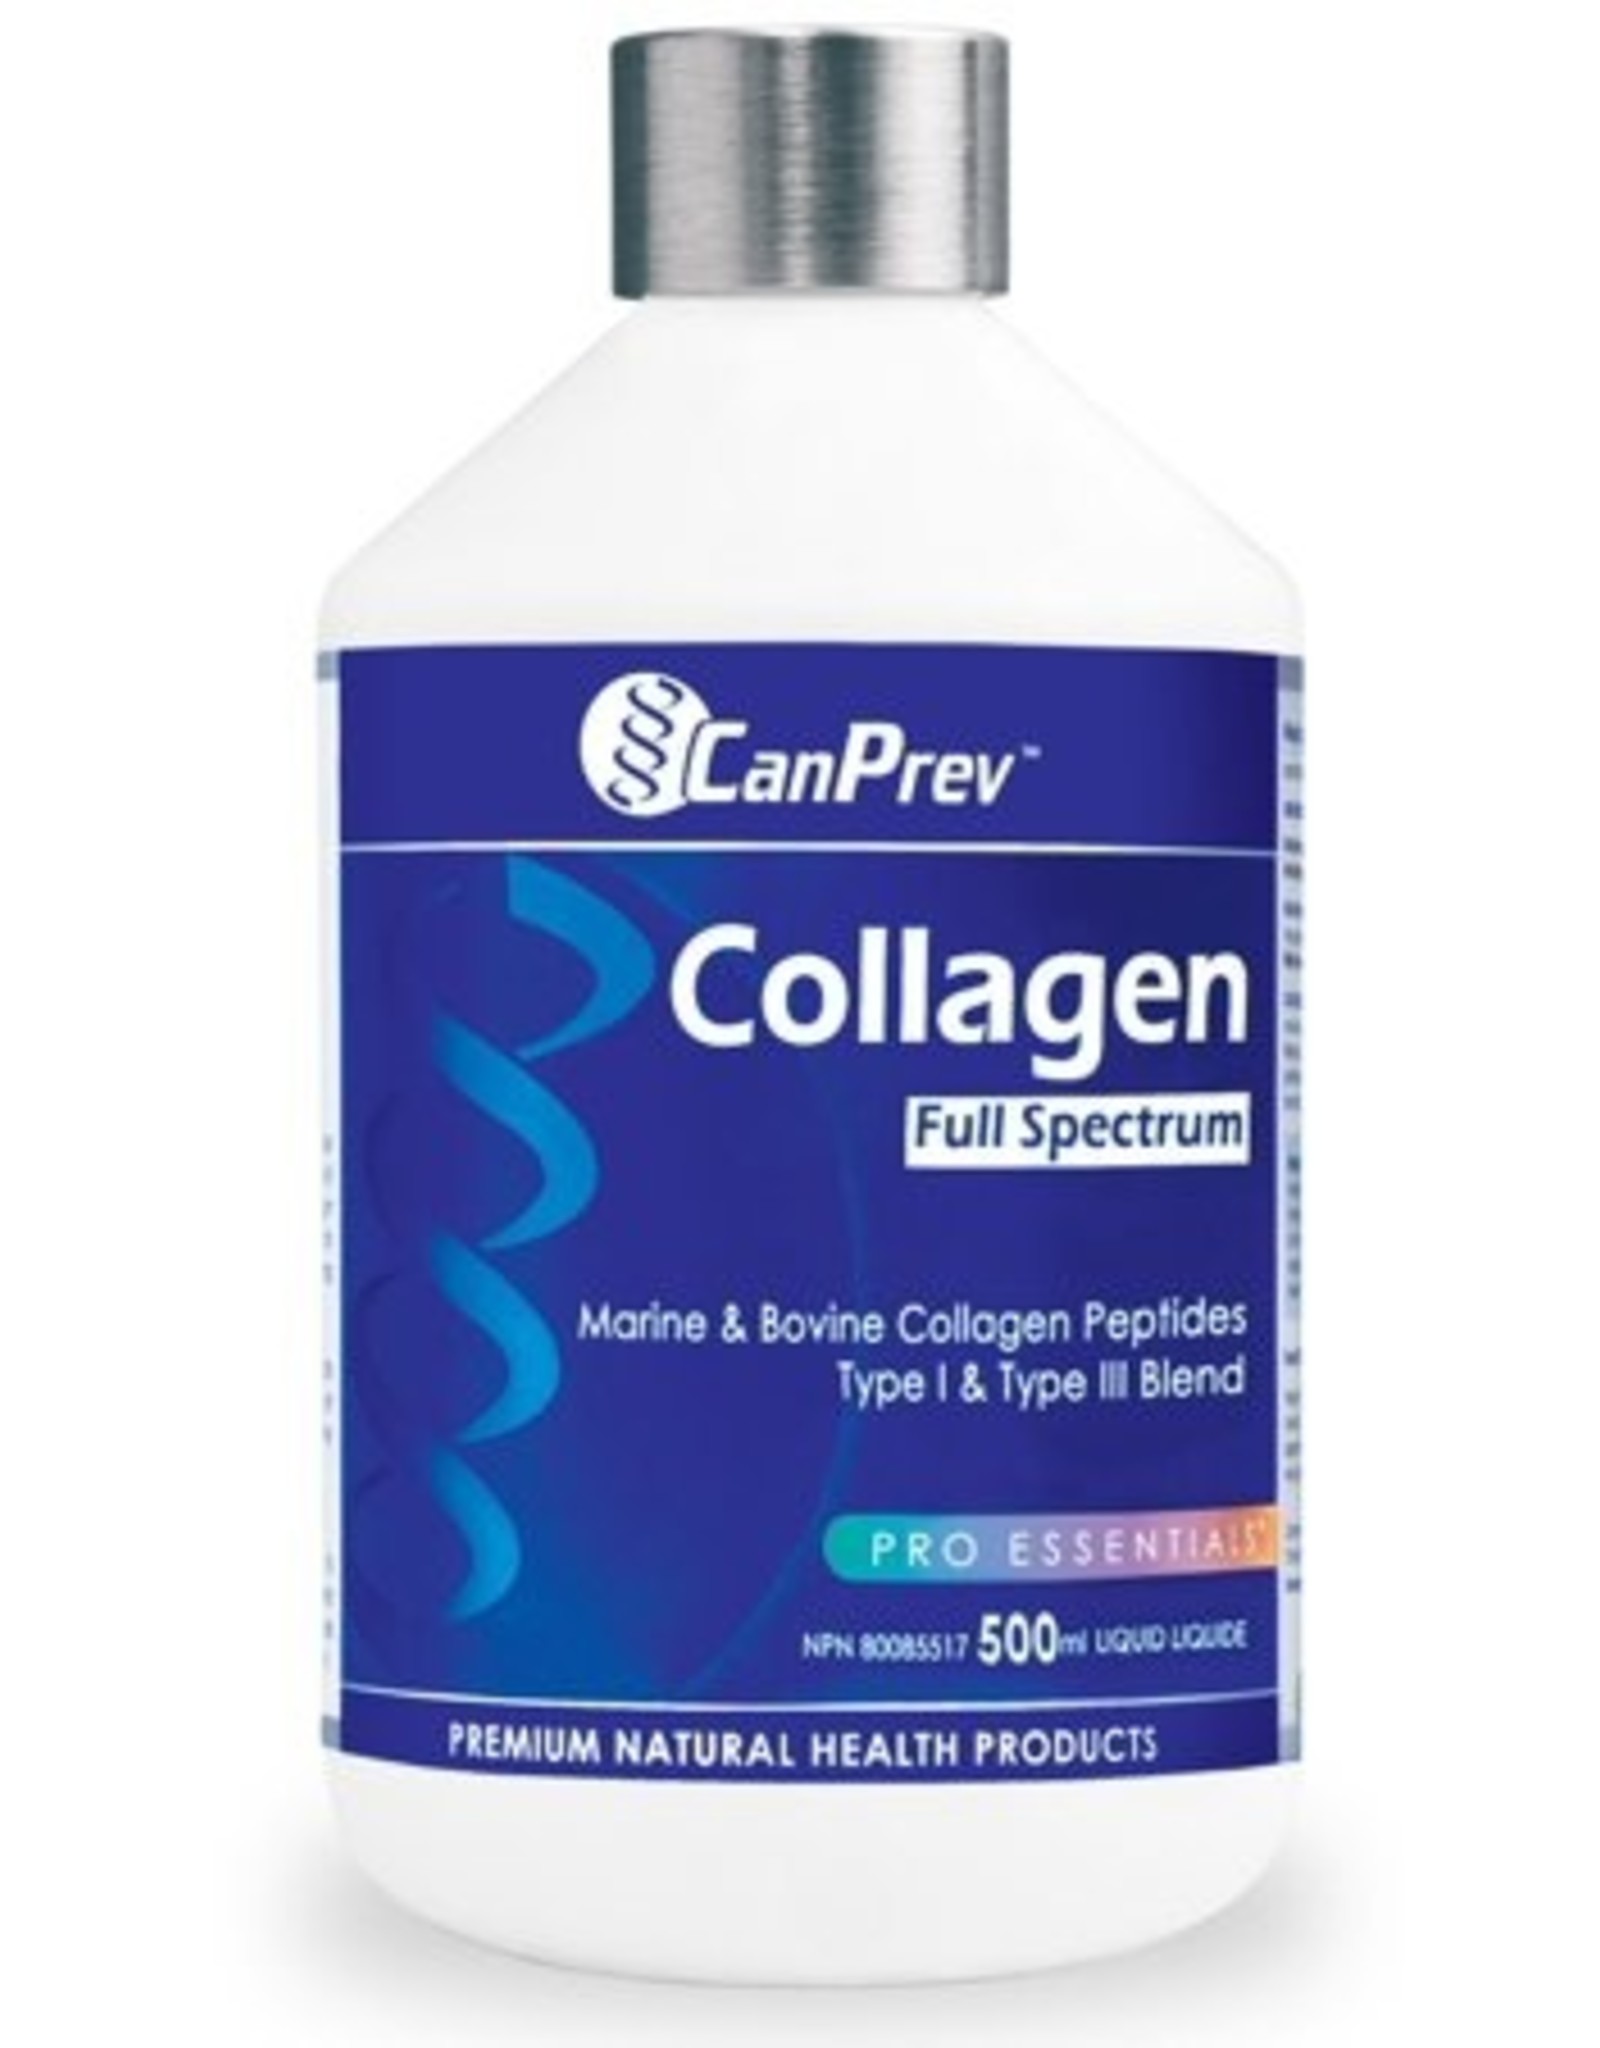 CanPrev CanPrev Collagen Full Spectrum 500ml